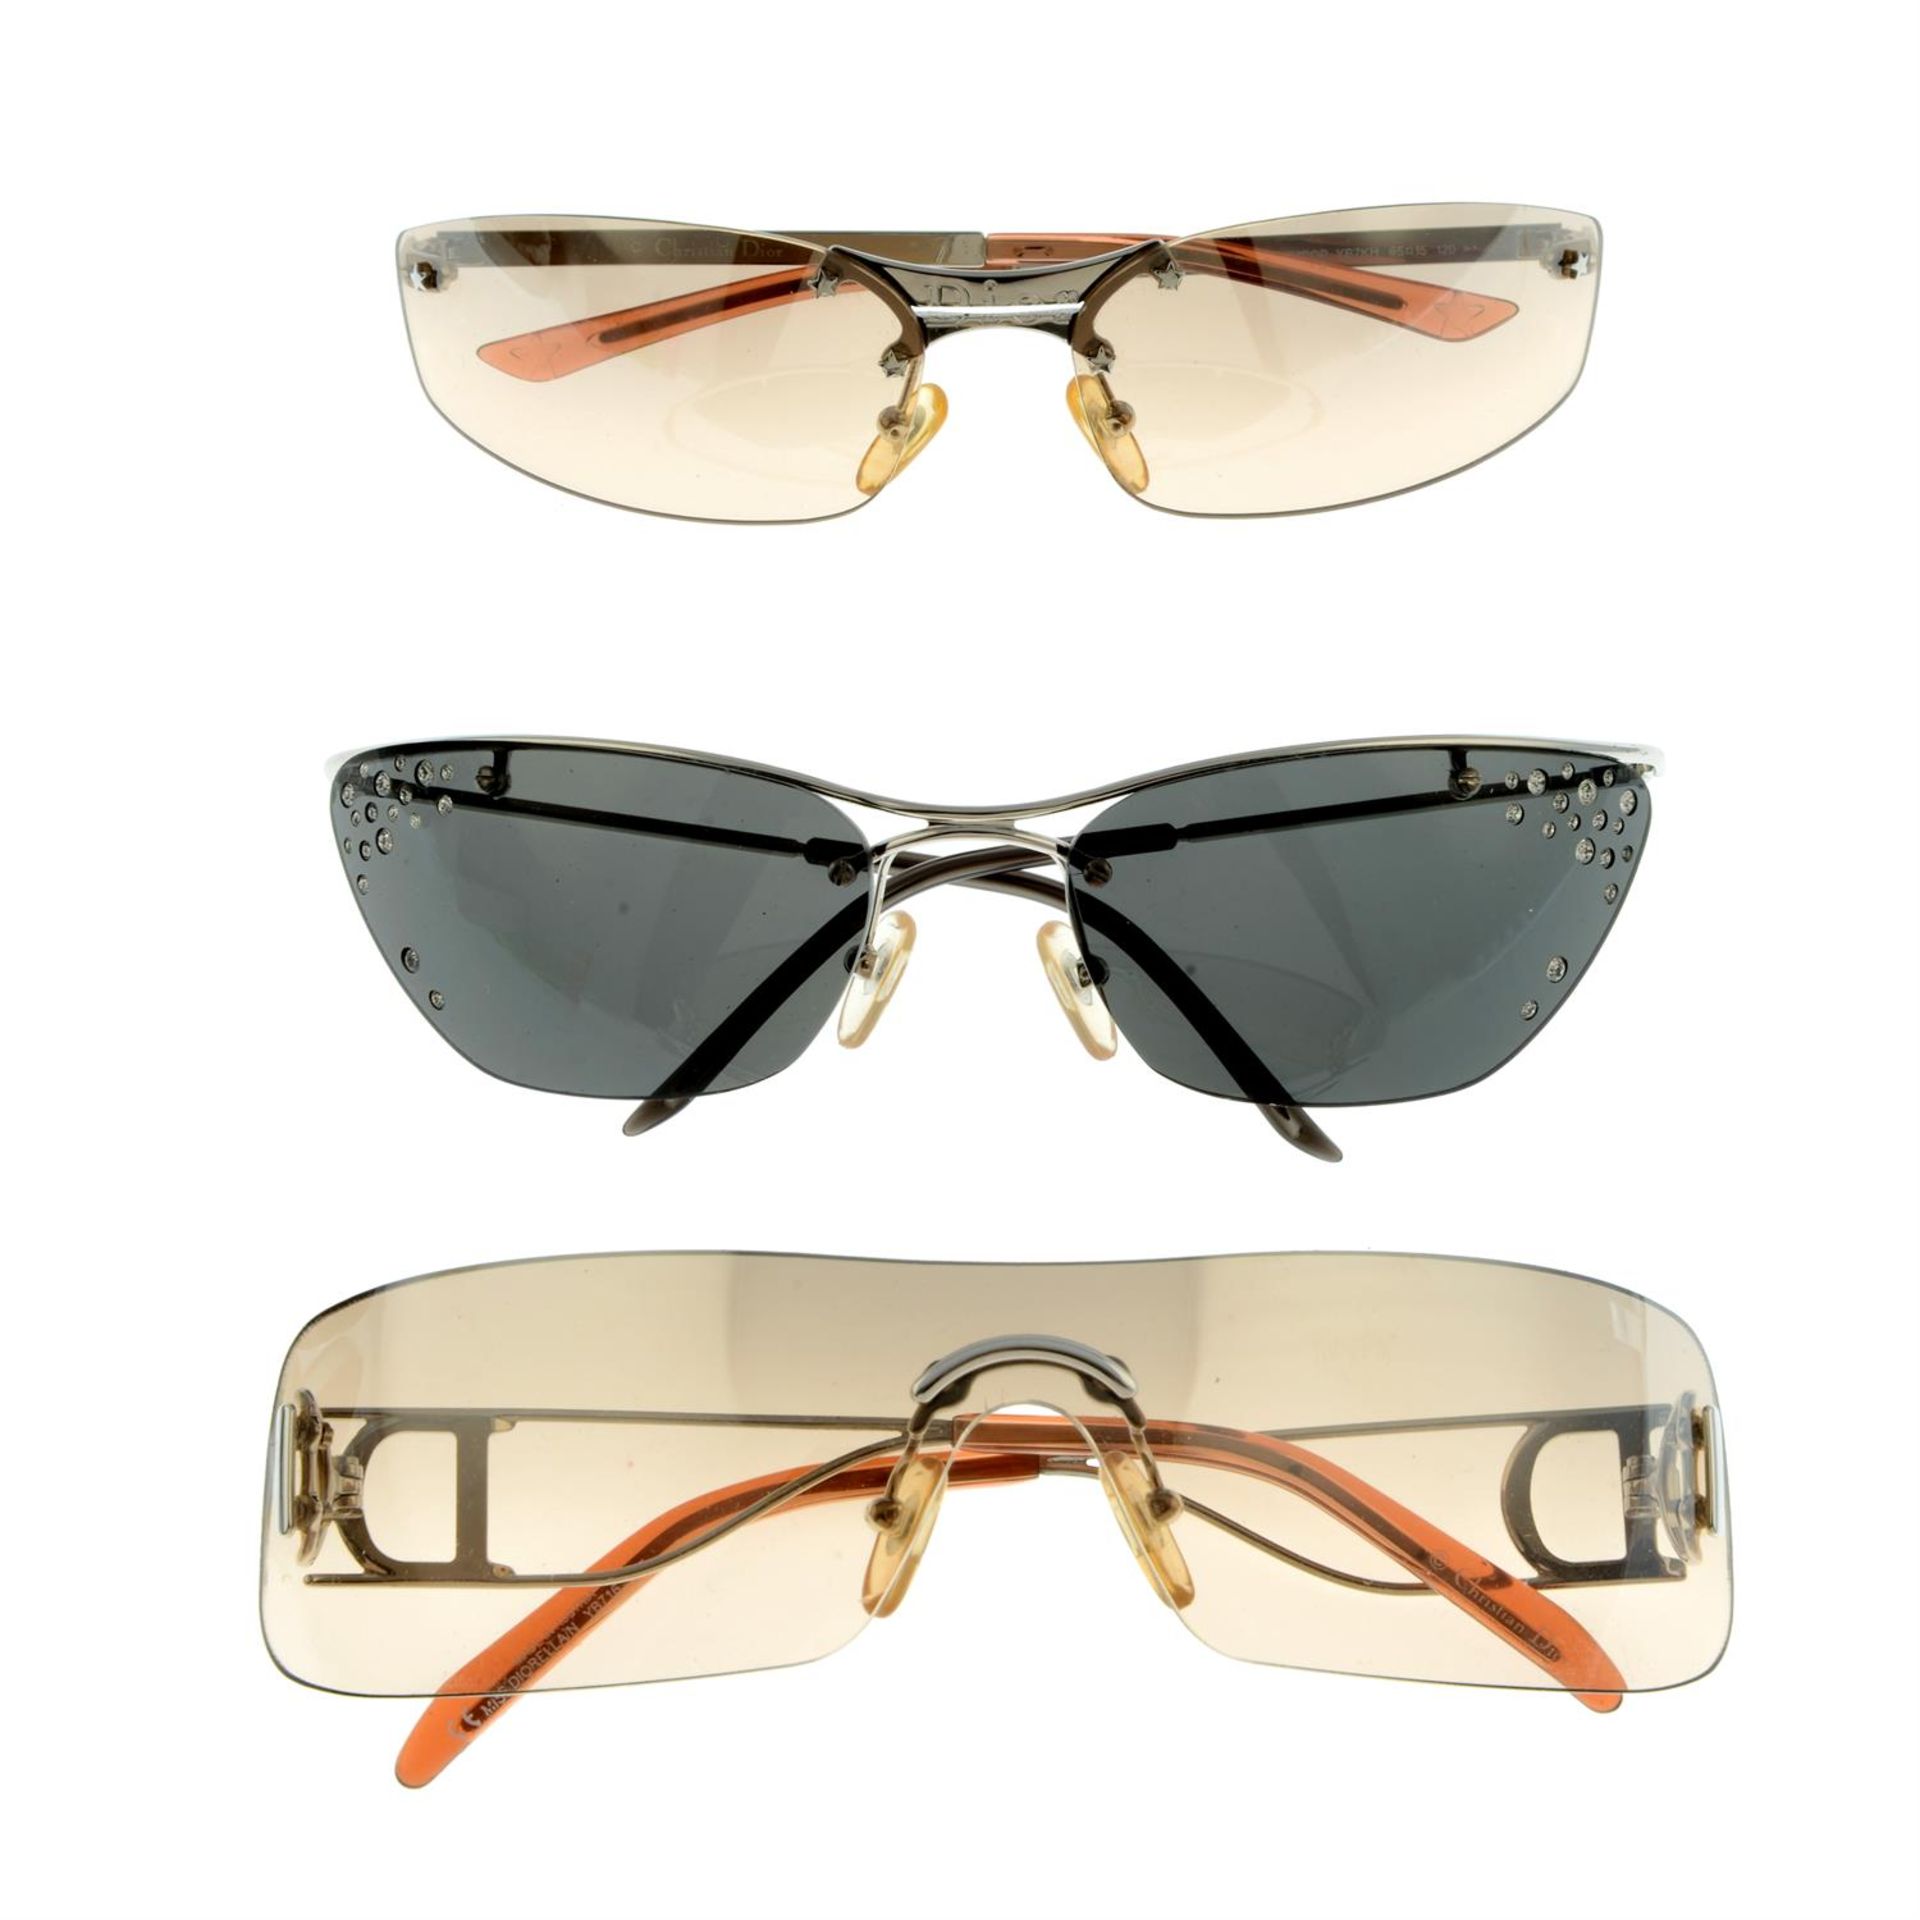 CHRISTIAN DIOR - three pairs of sunglasses.